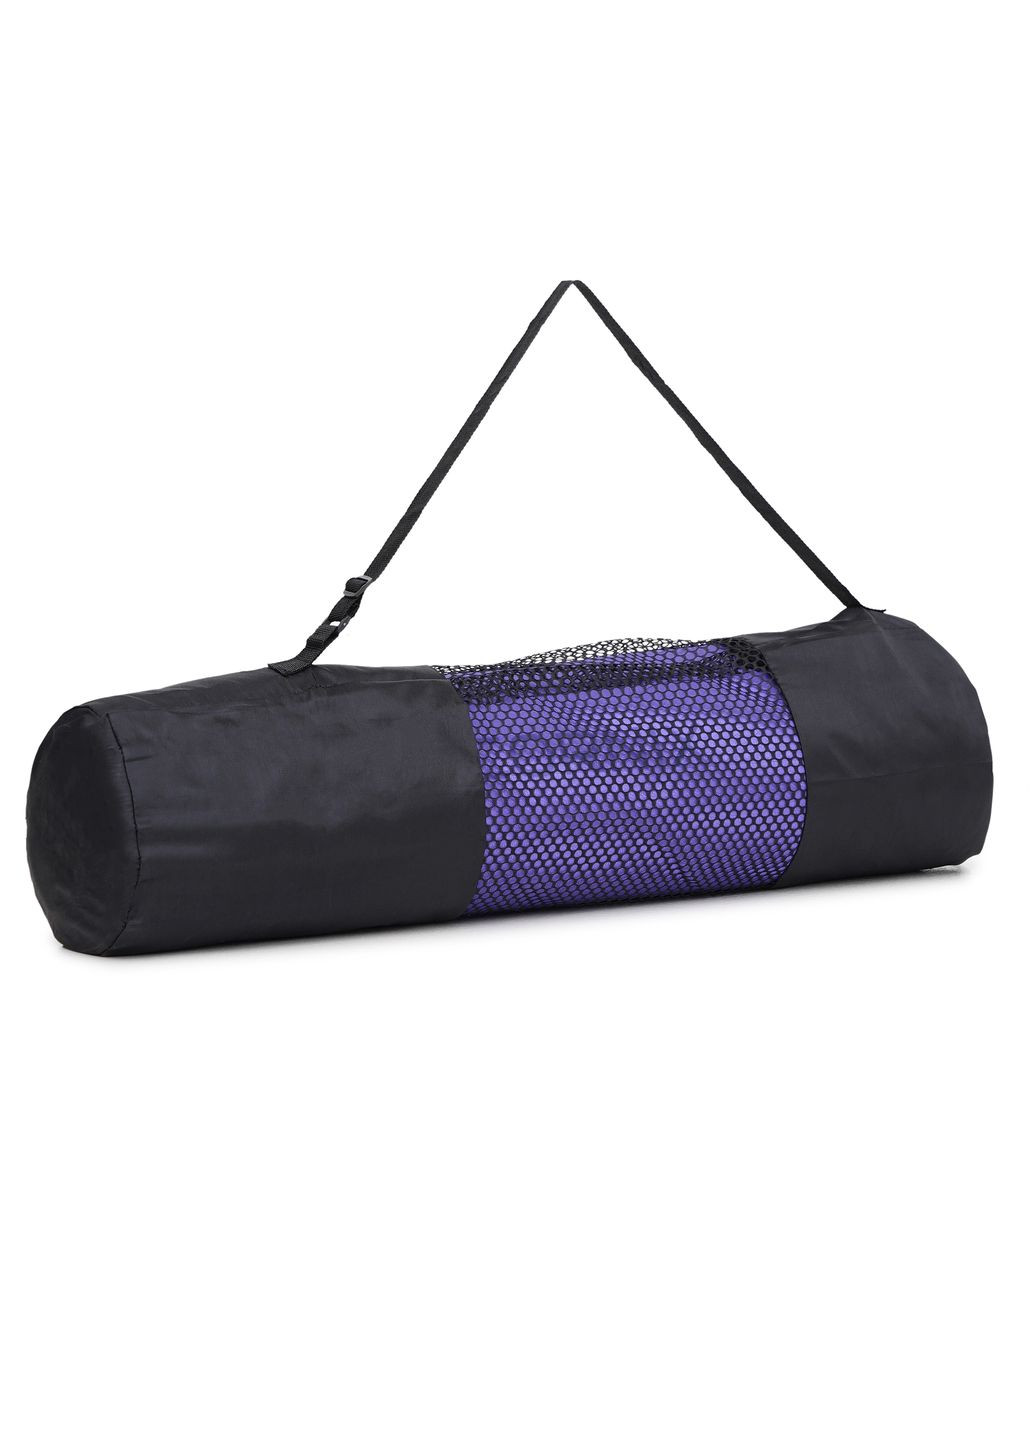 Коврик спортивный TPE 183 x 61 x 0.6 cм для йоги и фитнеса XR0004 Violet/Purple Cornix xr-0004 (275654224)